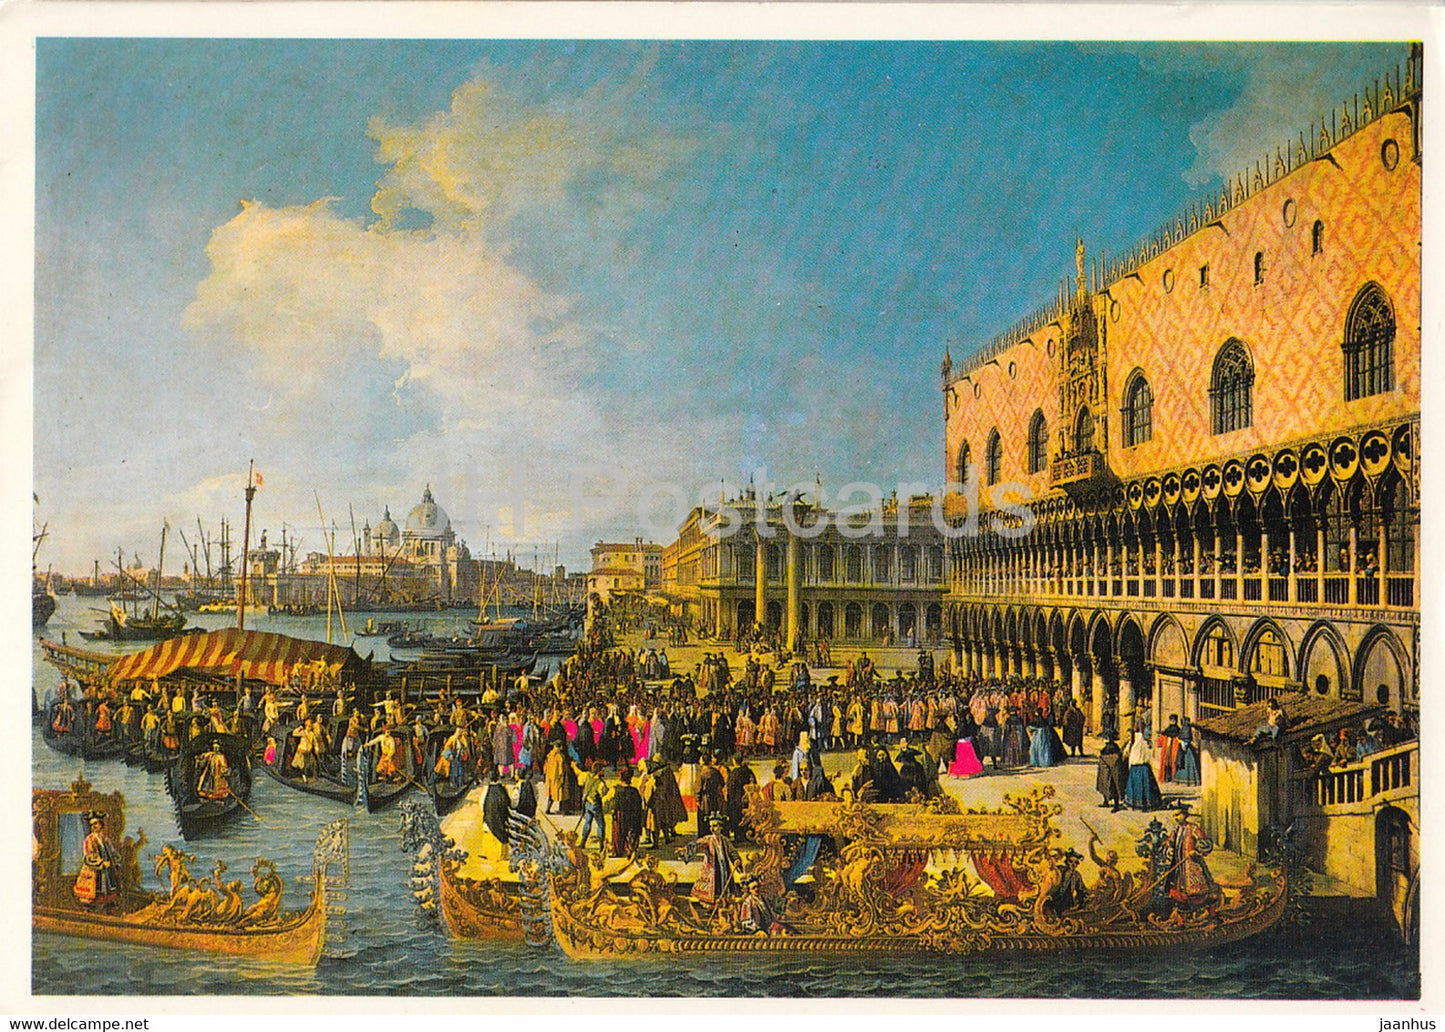 painting by Canaletto - The Bucintoro returning to the Quai - Venice - Venezia - Italian art - Italy - unused - JH Postcards